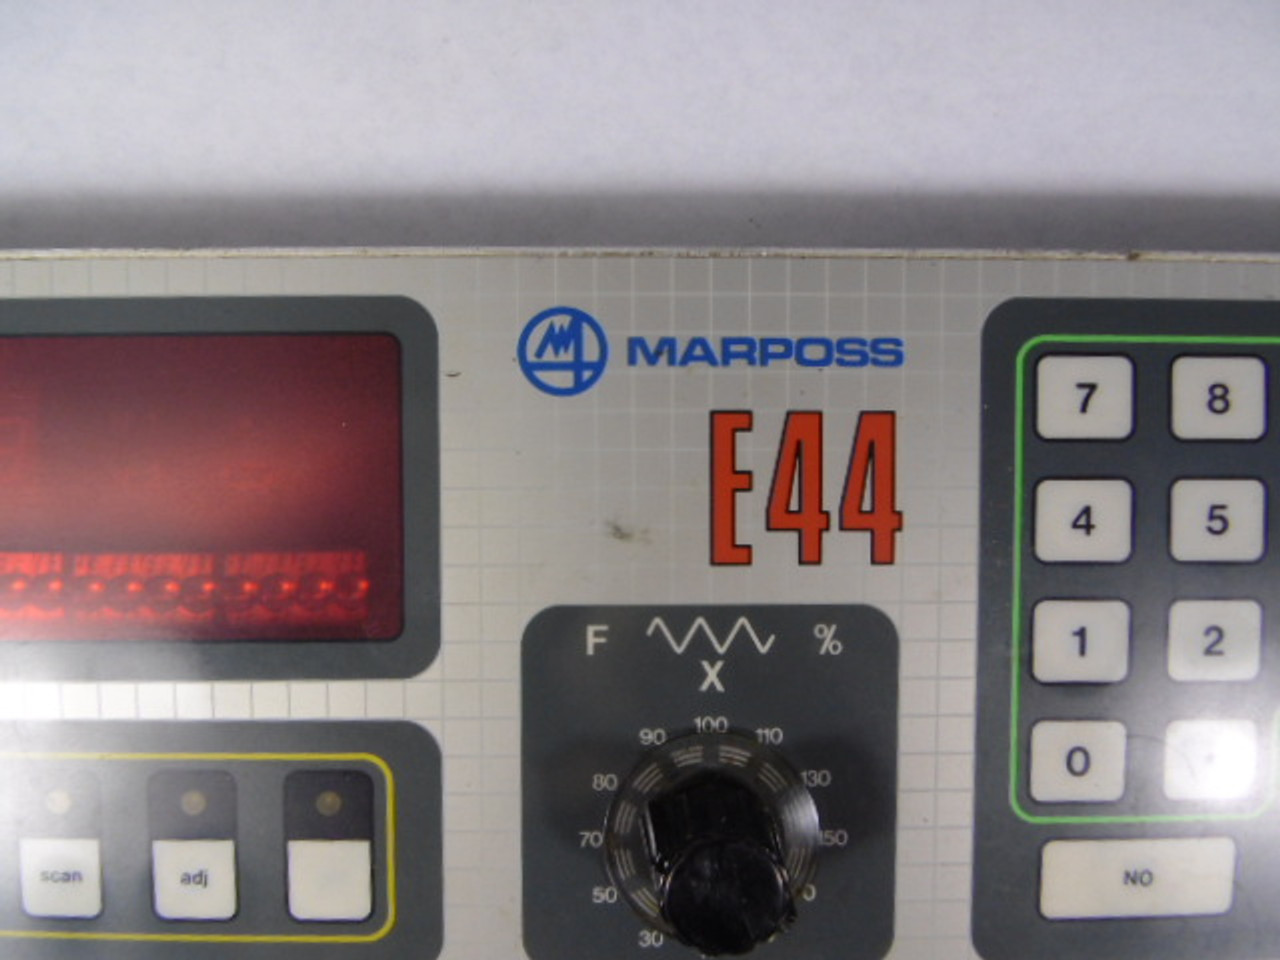 Marposs E44 6330320200 Operator Panel ! AS IS !